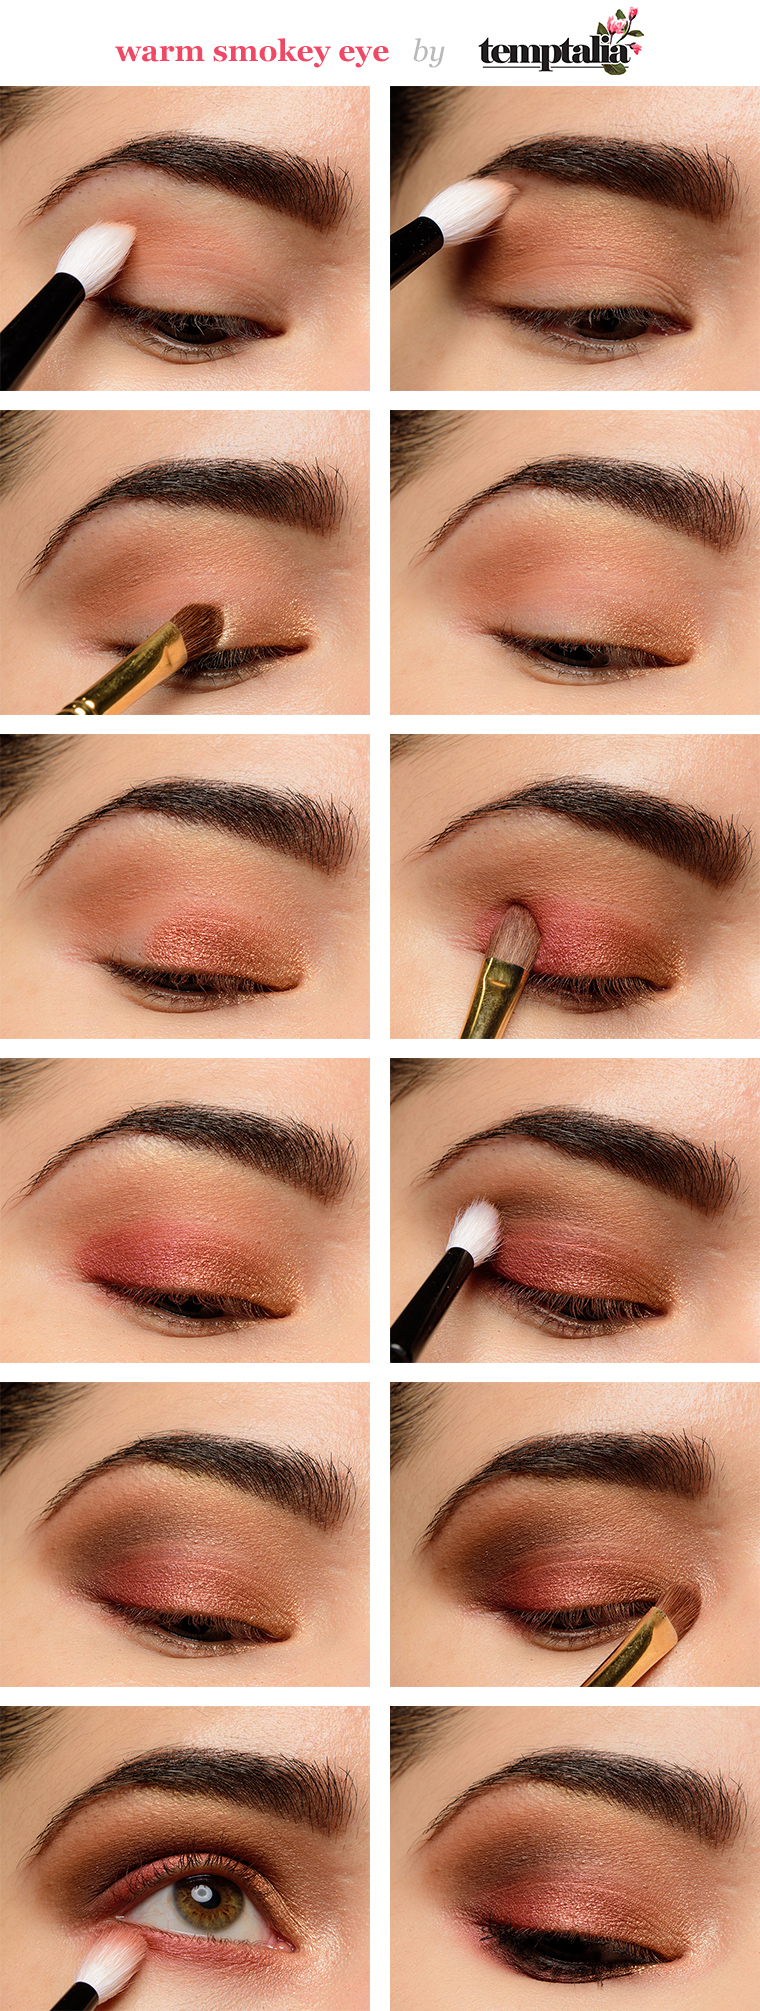 Eye Makeup Images How To Apply Eyeshadow Smokey Eye Makeup Tutorial For Beginners